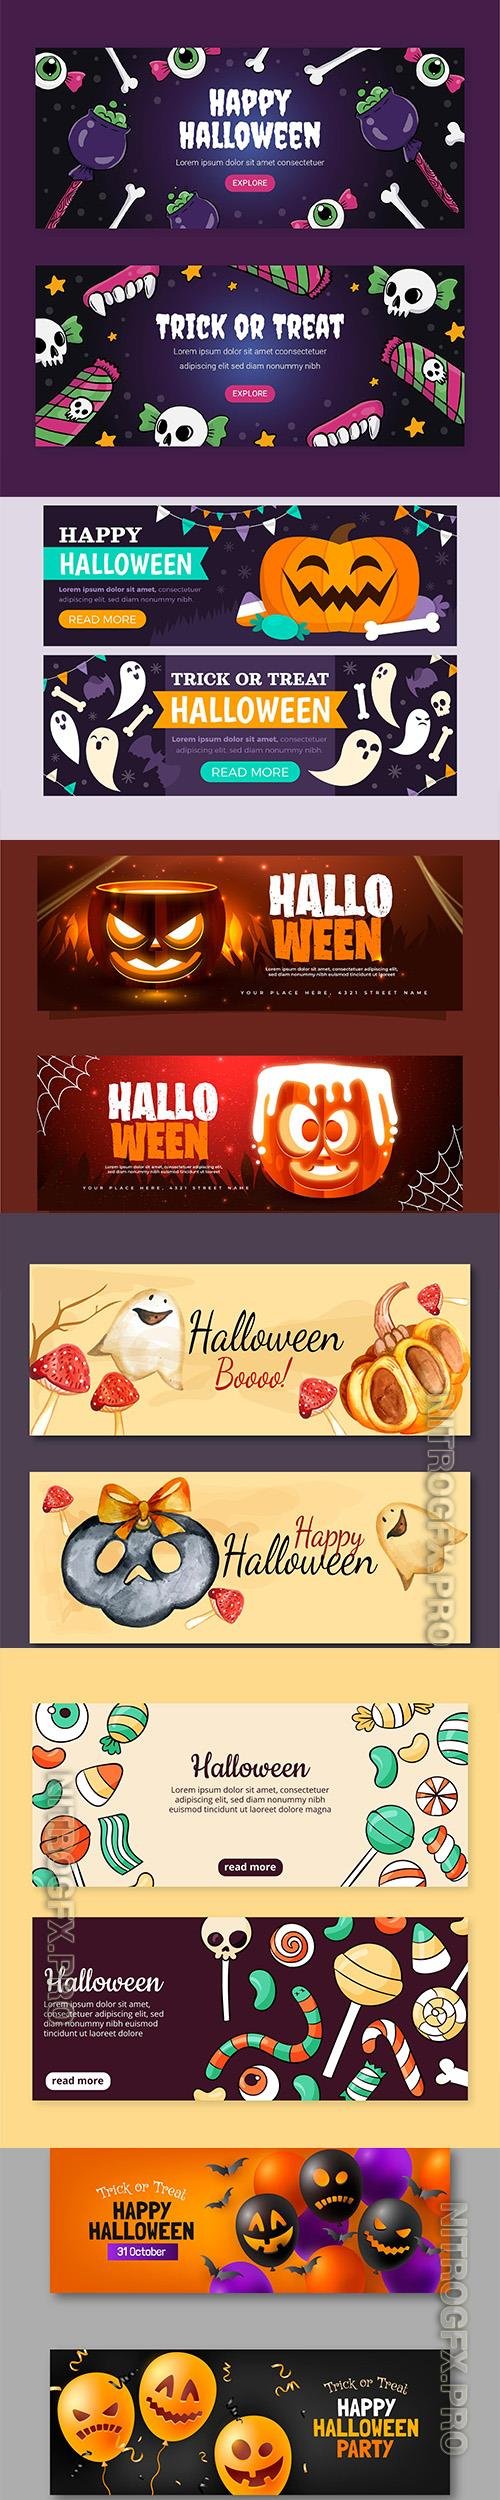 Realistic halloween horizontal sale banners set vol 2